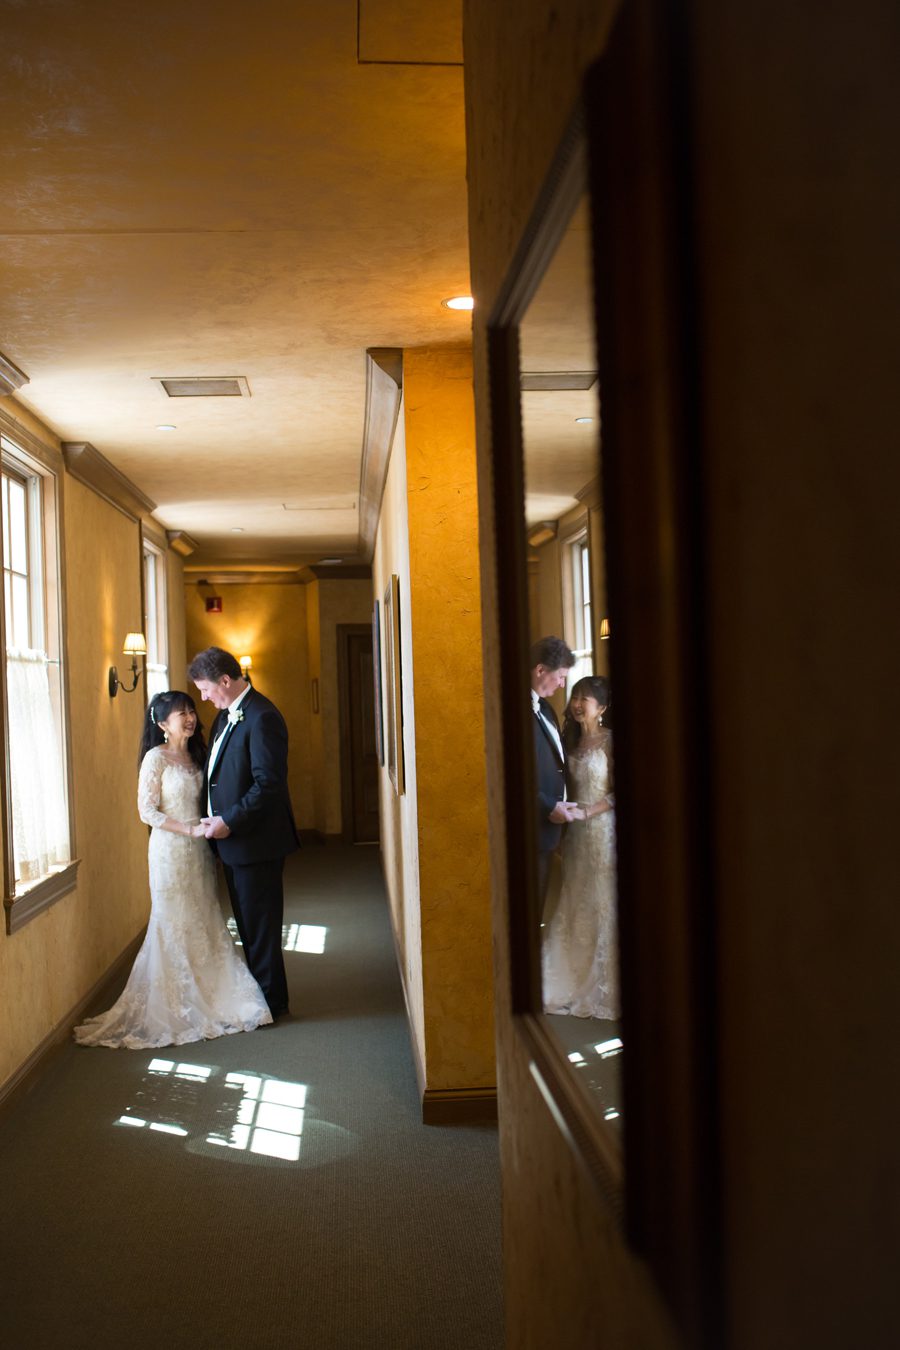 Wedding photographer in geneva illinois – mirror reflection